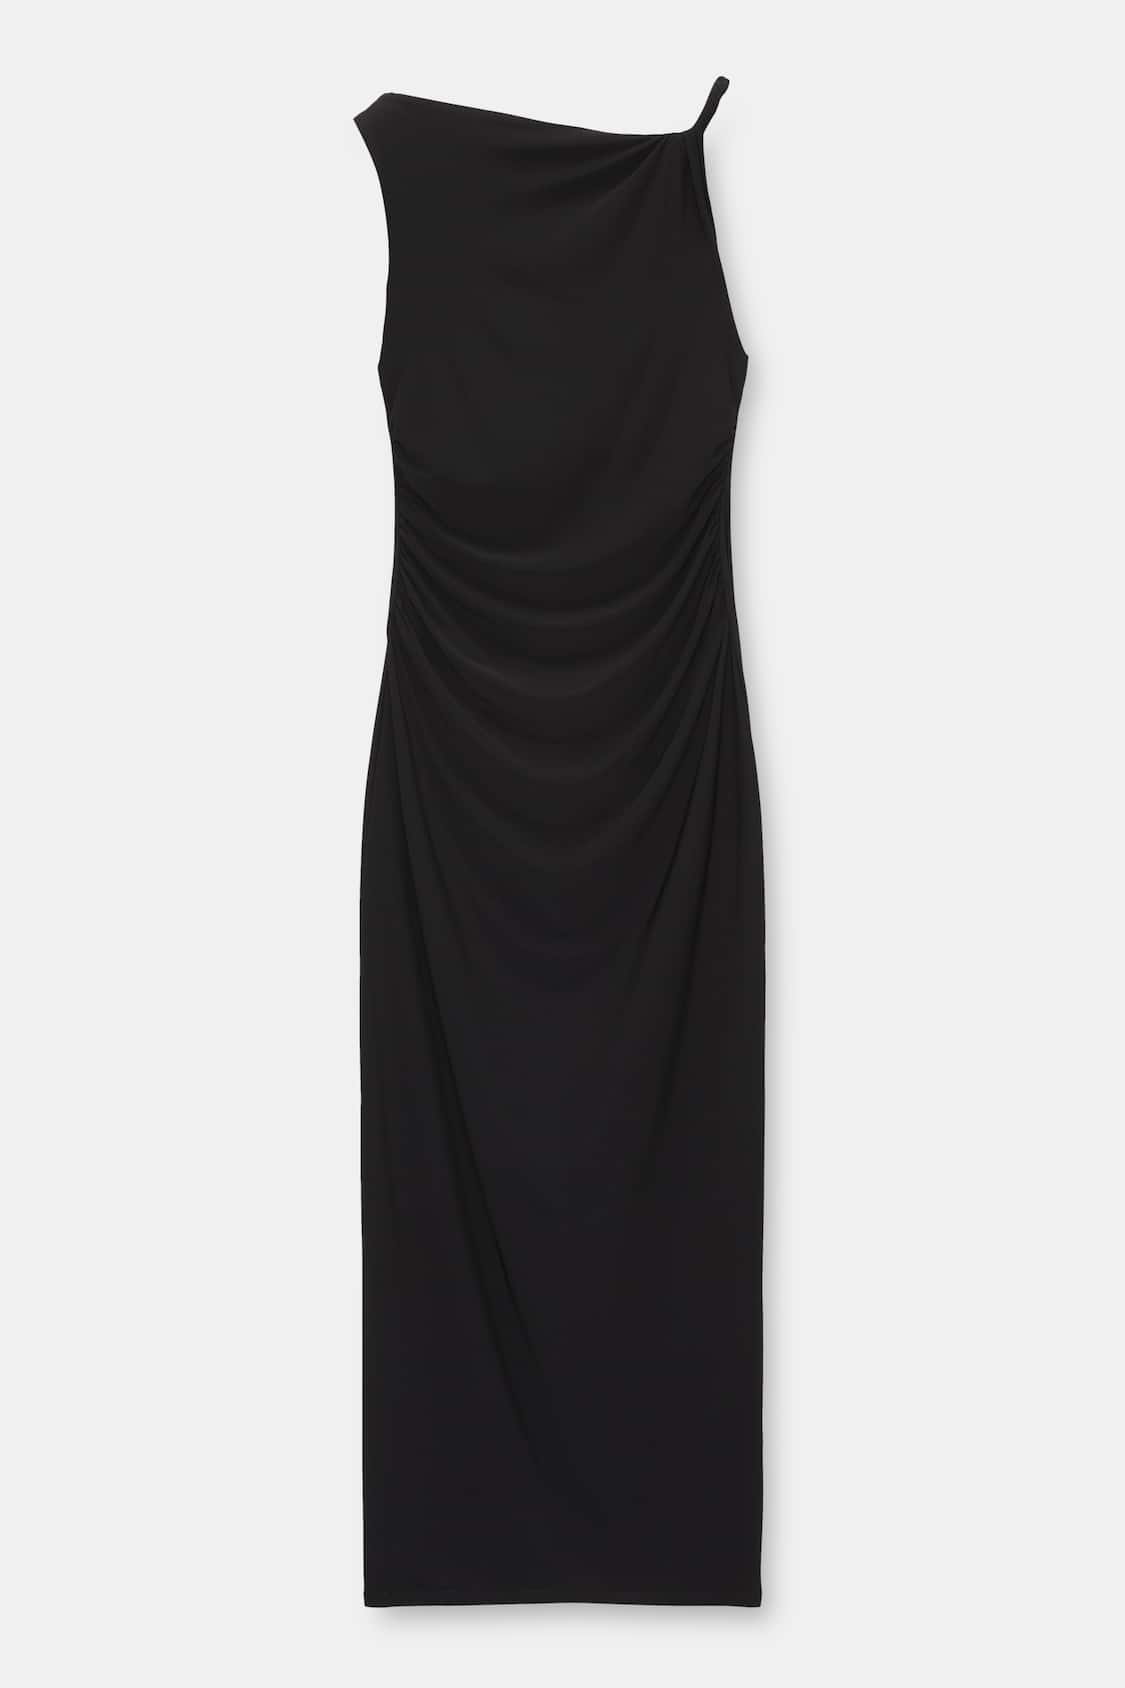 Croch-say My Name - Black Knitted Midi Dress